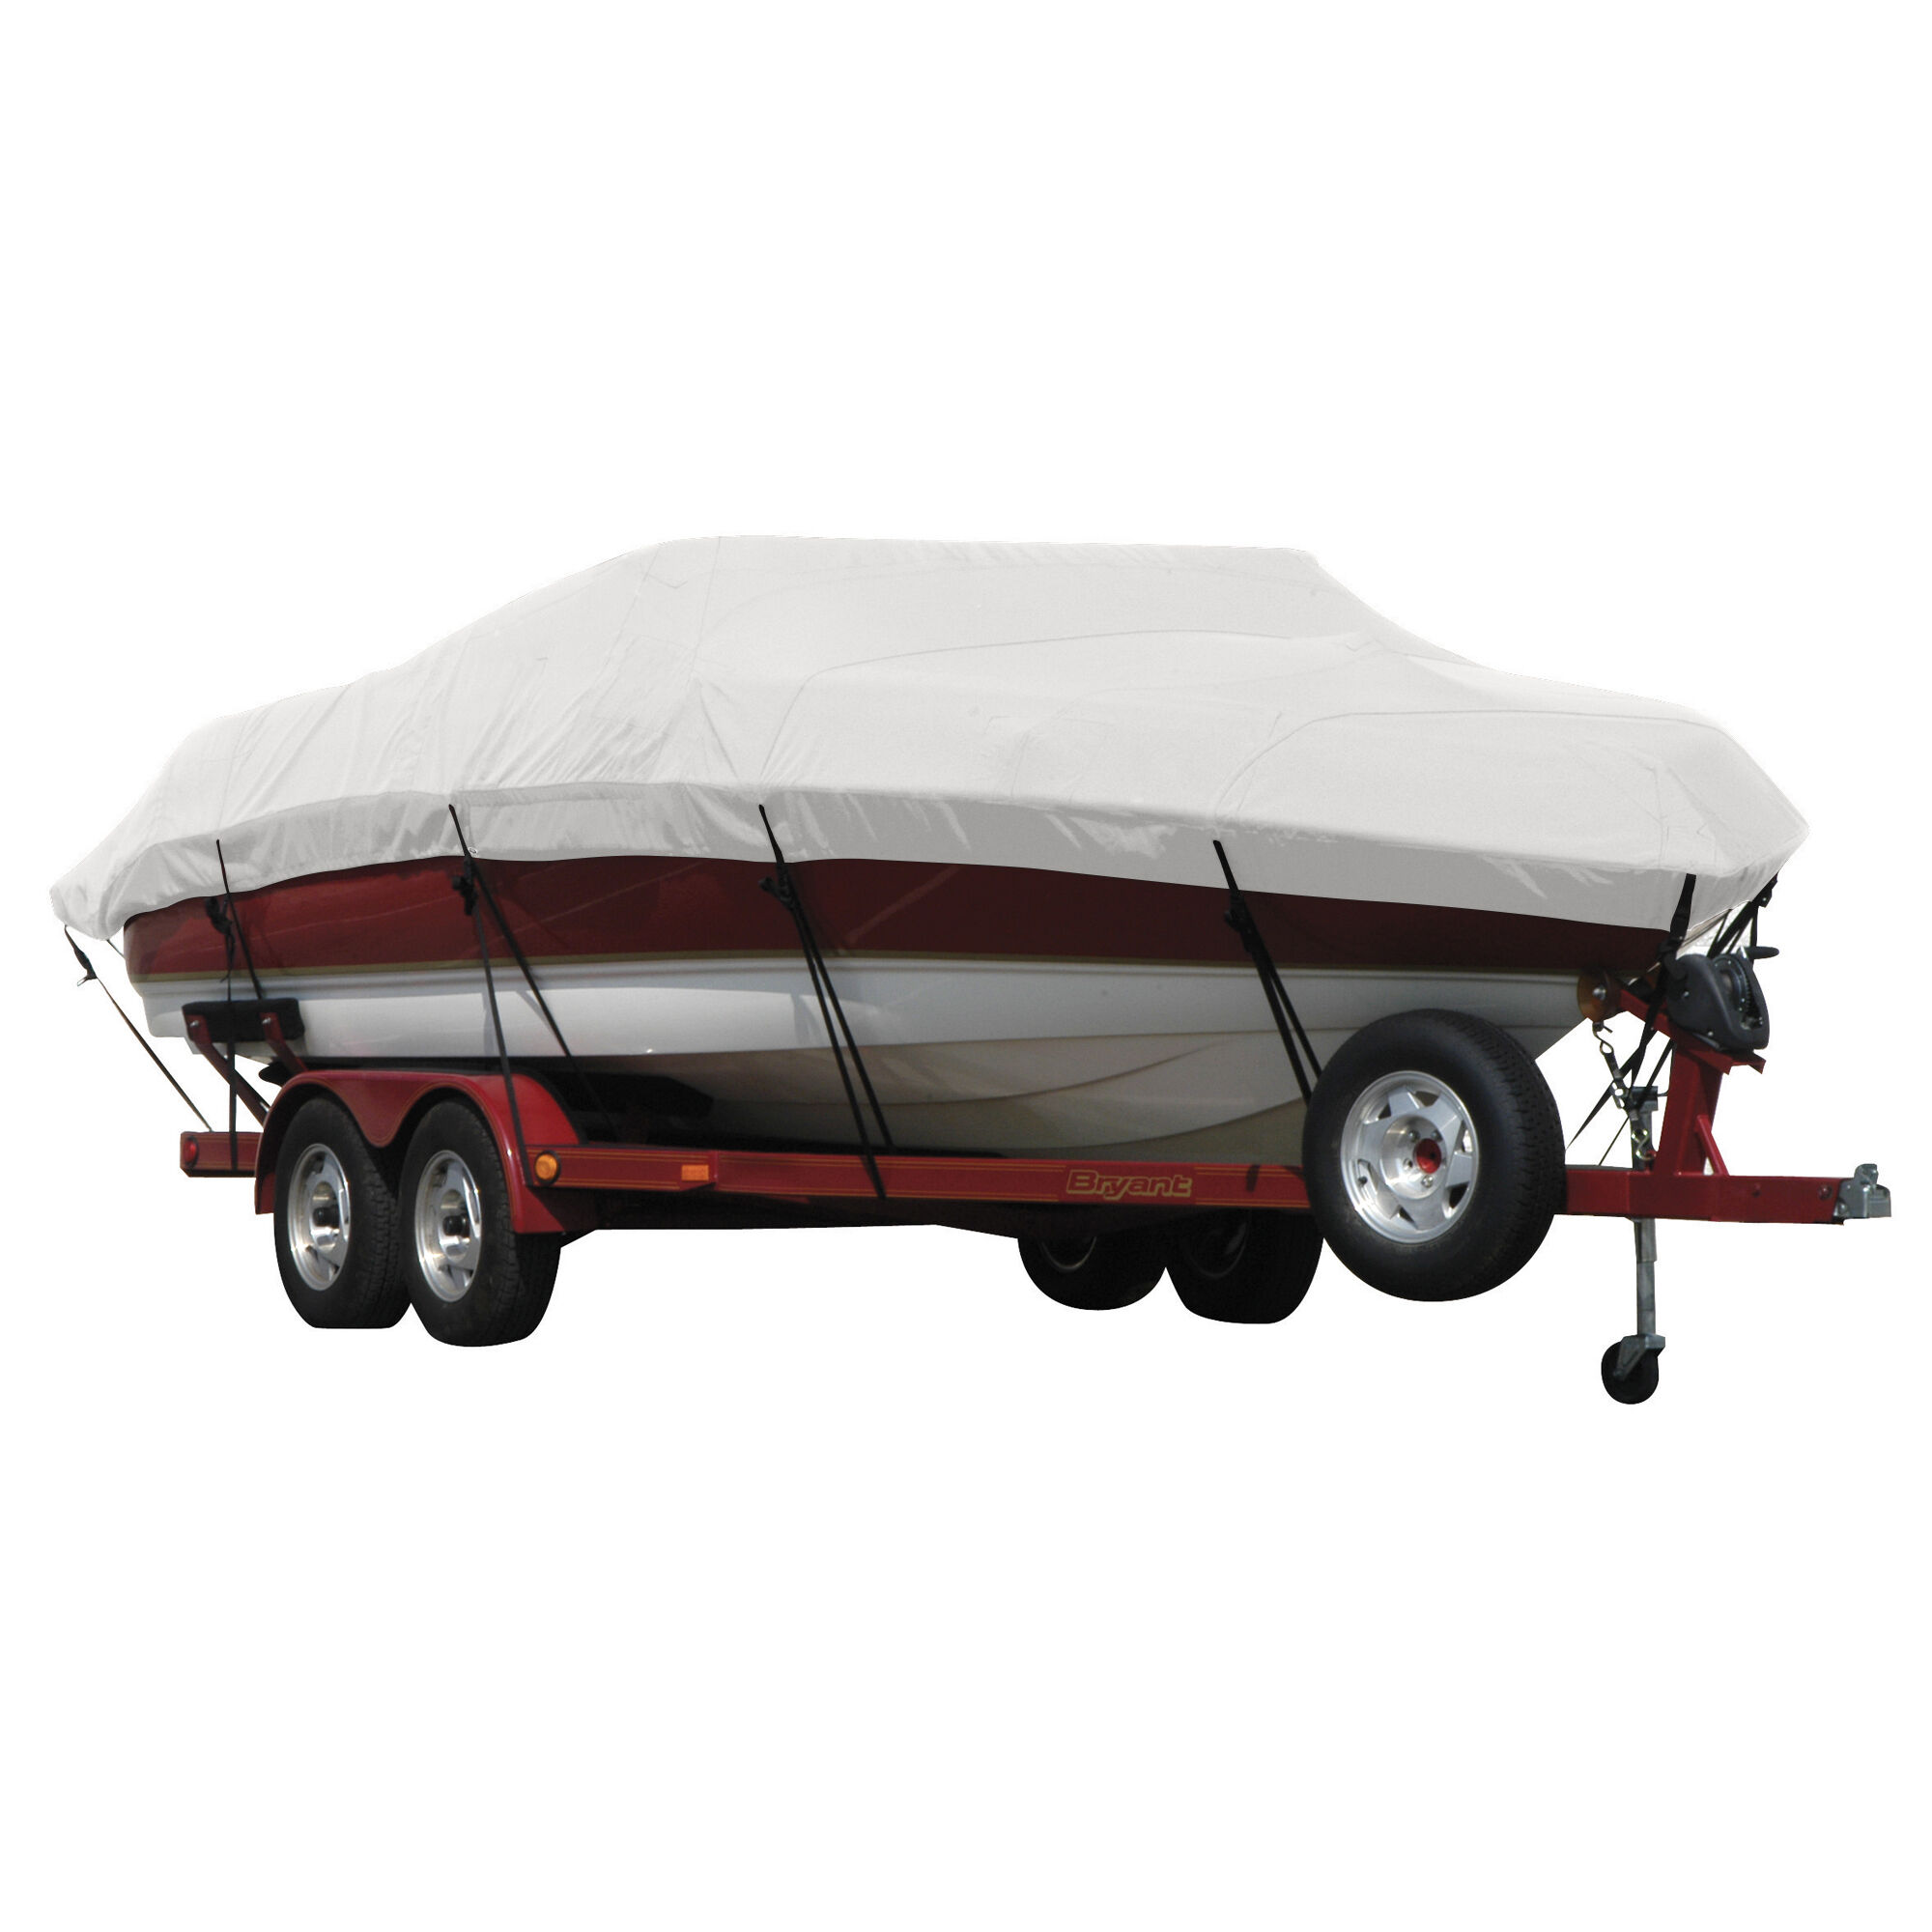 Covermate Exact Fit Sunbrella Boat Cover for Seaswirl Striper 2120 Striper 2120 Cuddy Hard Top No Pulpit I/O. Natural in Natural Tan